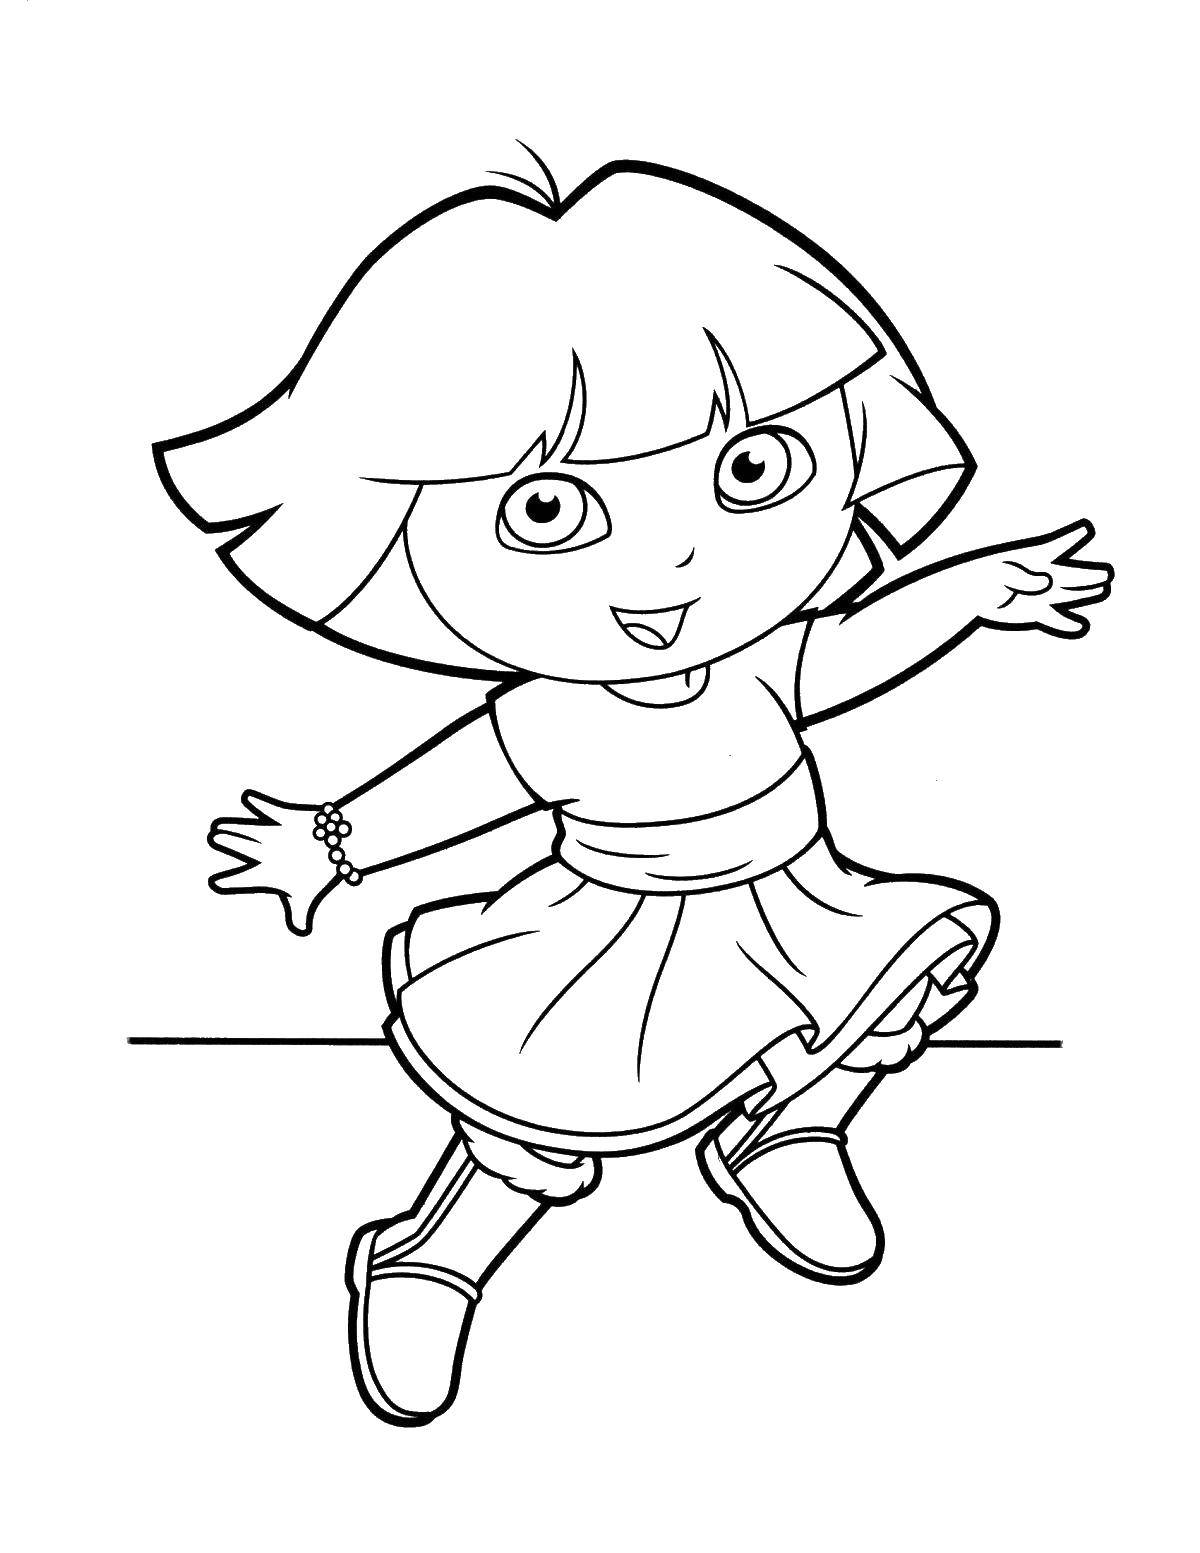 Coloring Dasha dancing. Category Cartoon character. Tags:  Cartoon character.